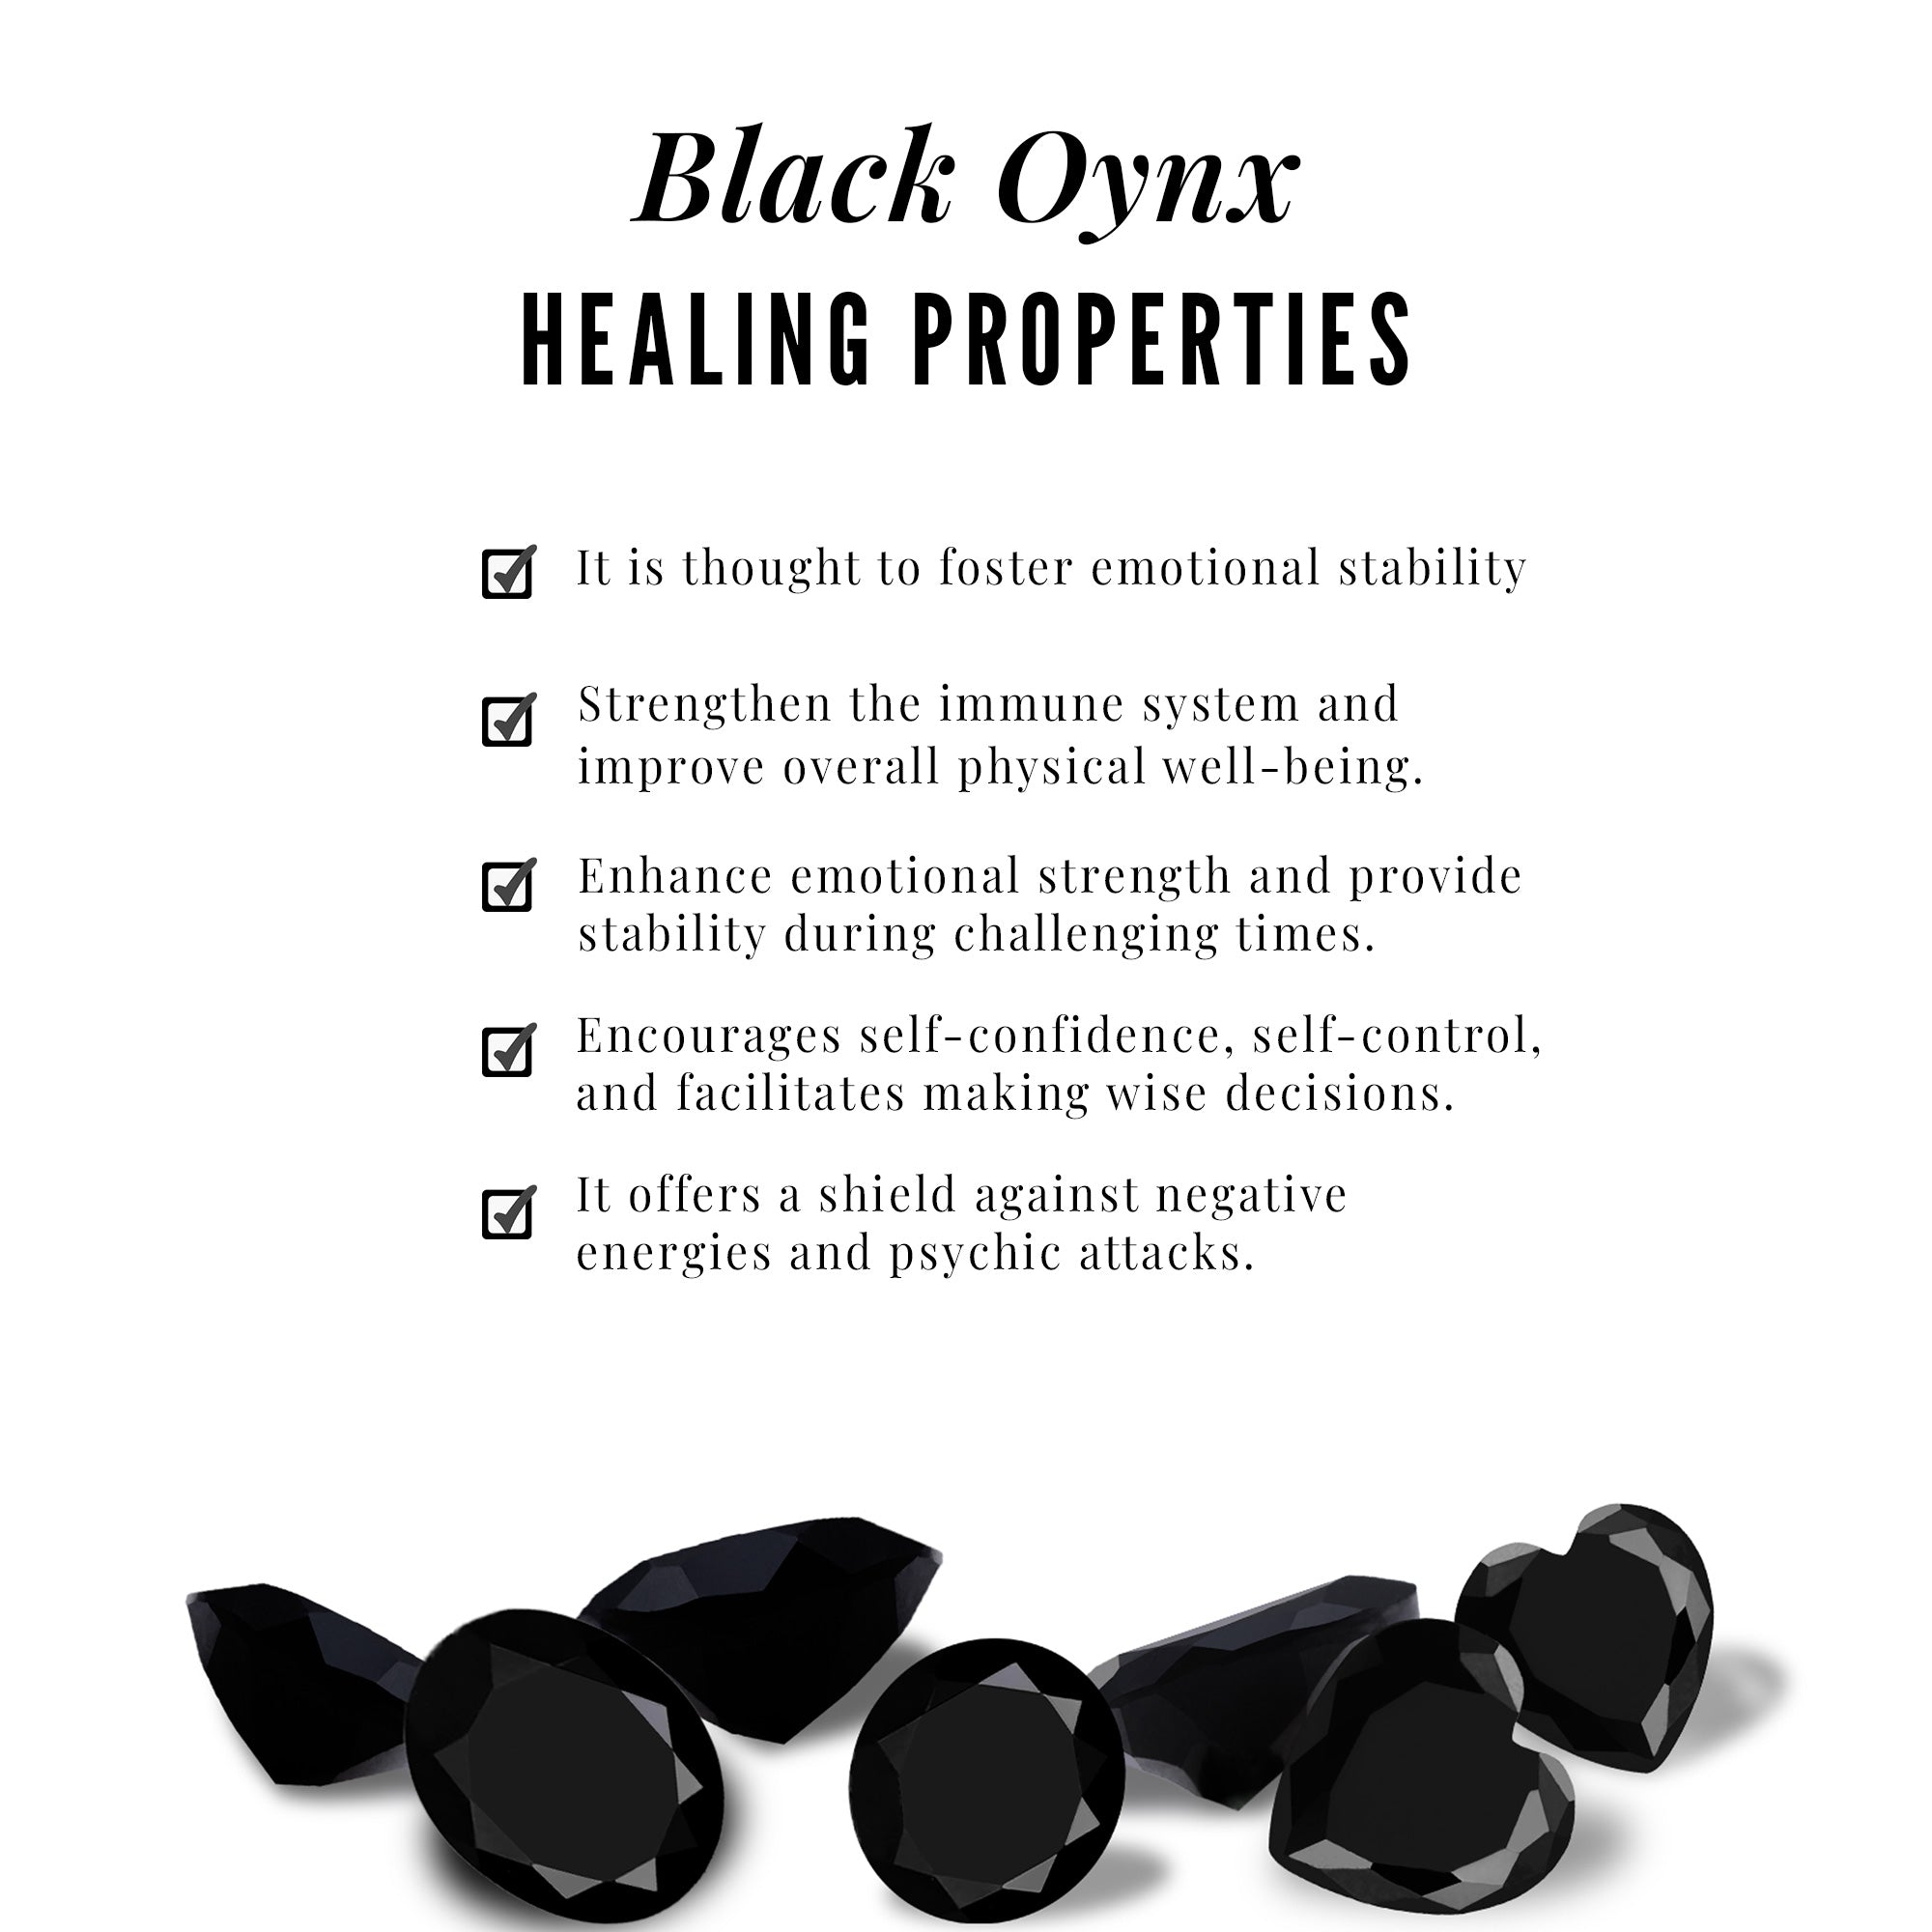 Genuine Black Onyx and Diamond Halo Pendant Necklace Black Onyx - ( AAA ) - Quality - Rosec Jewels